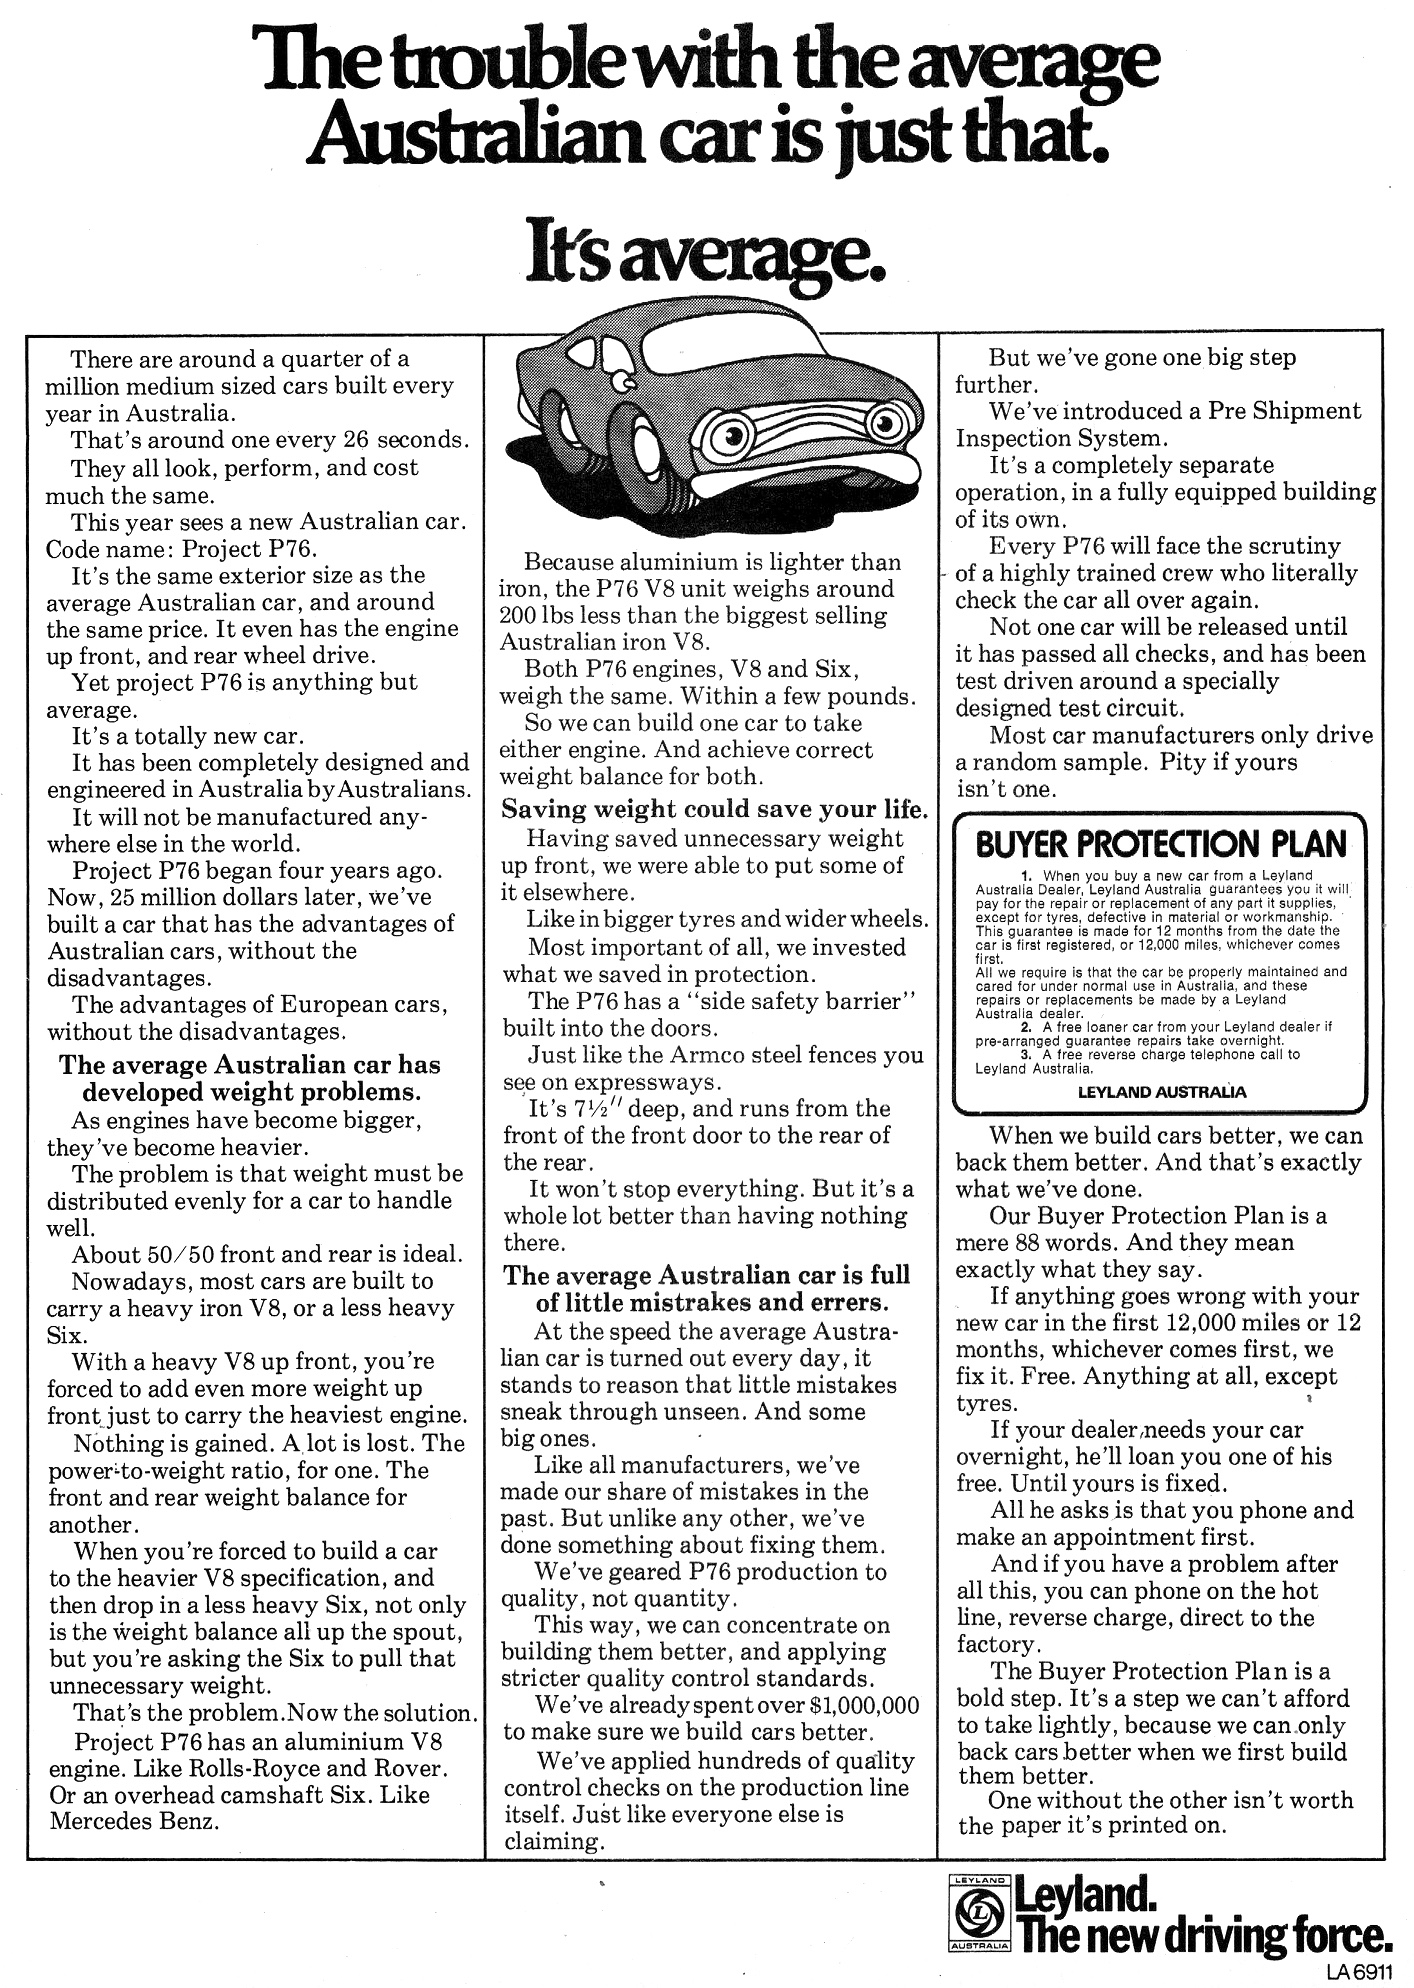 1973 Leyland Australia The Trouble With The Average Australian Car